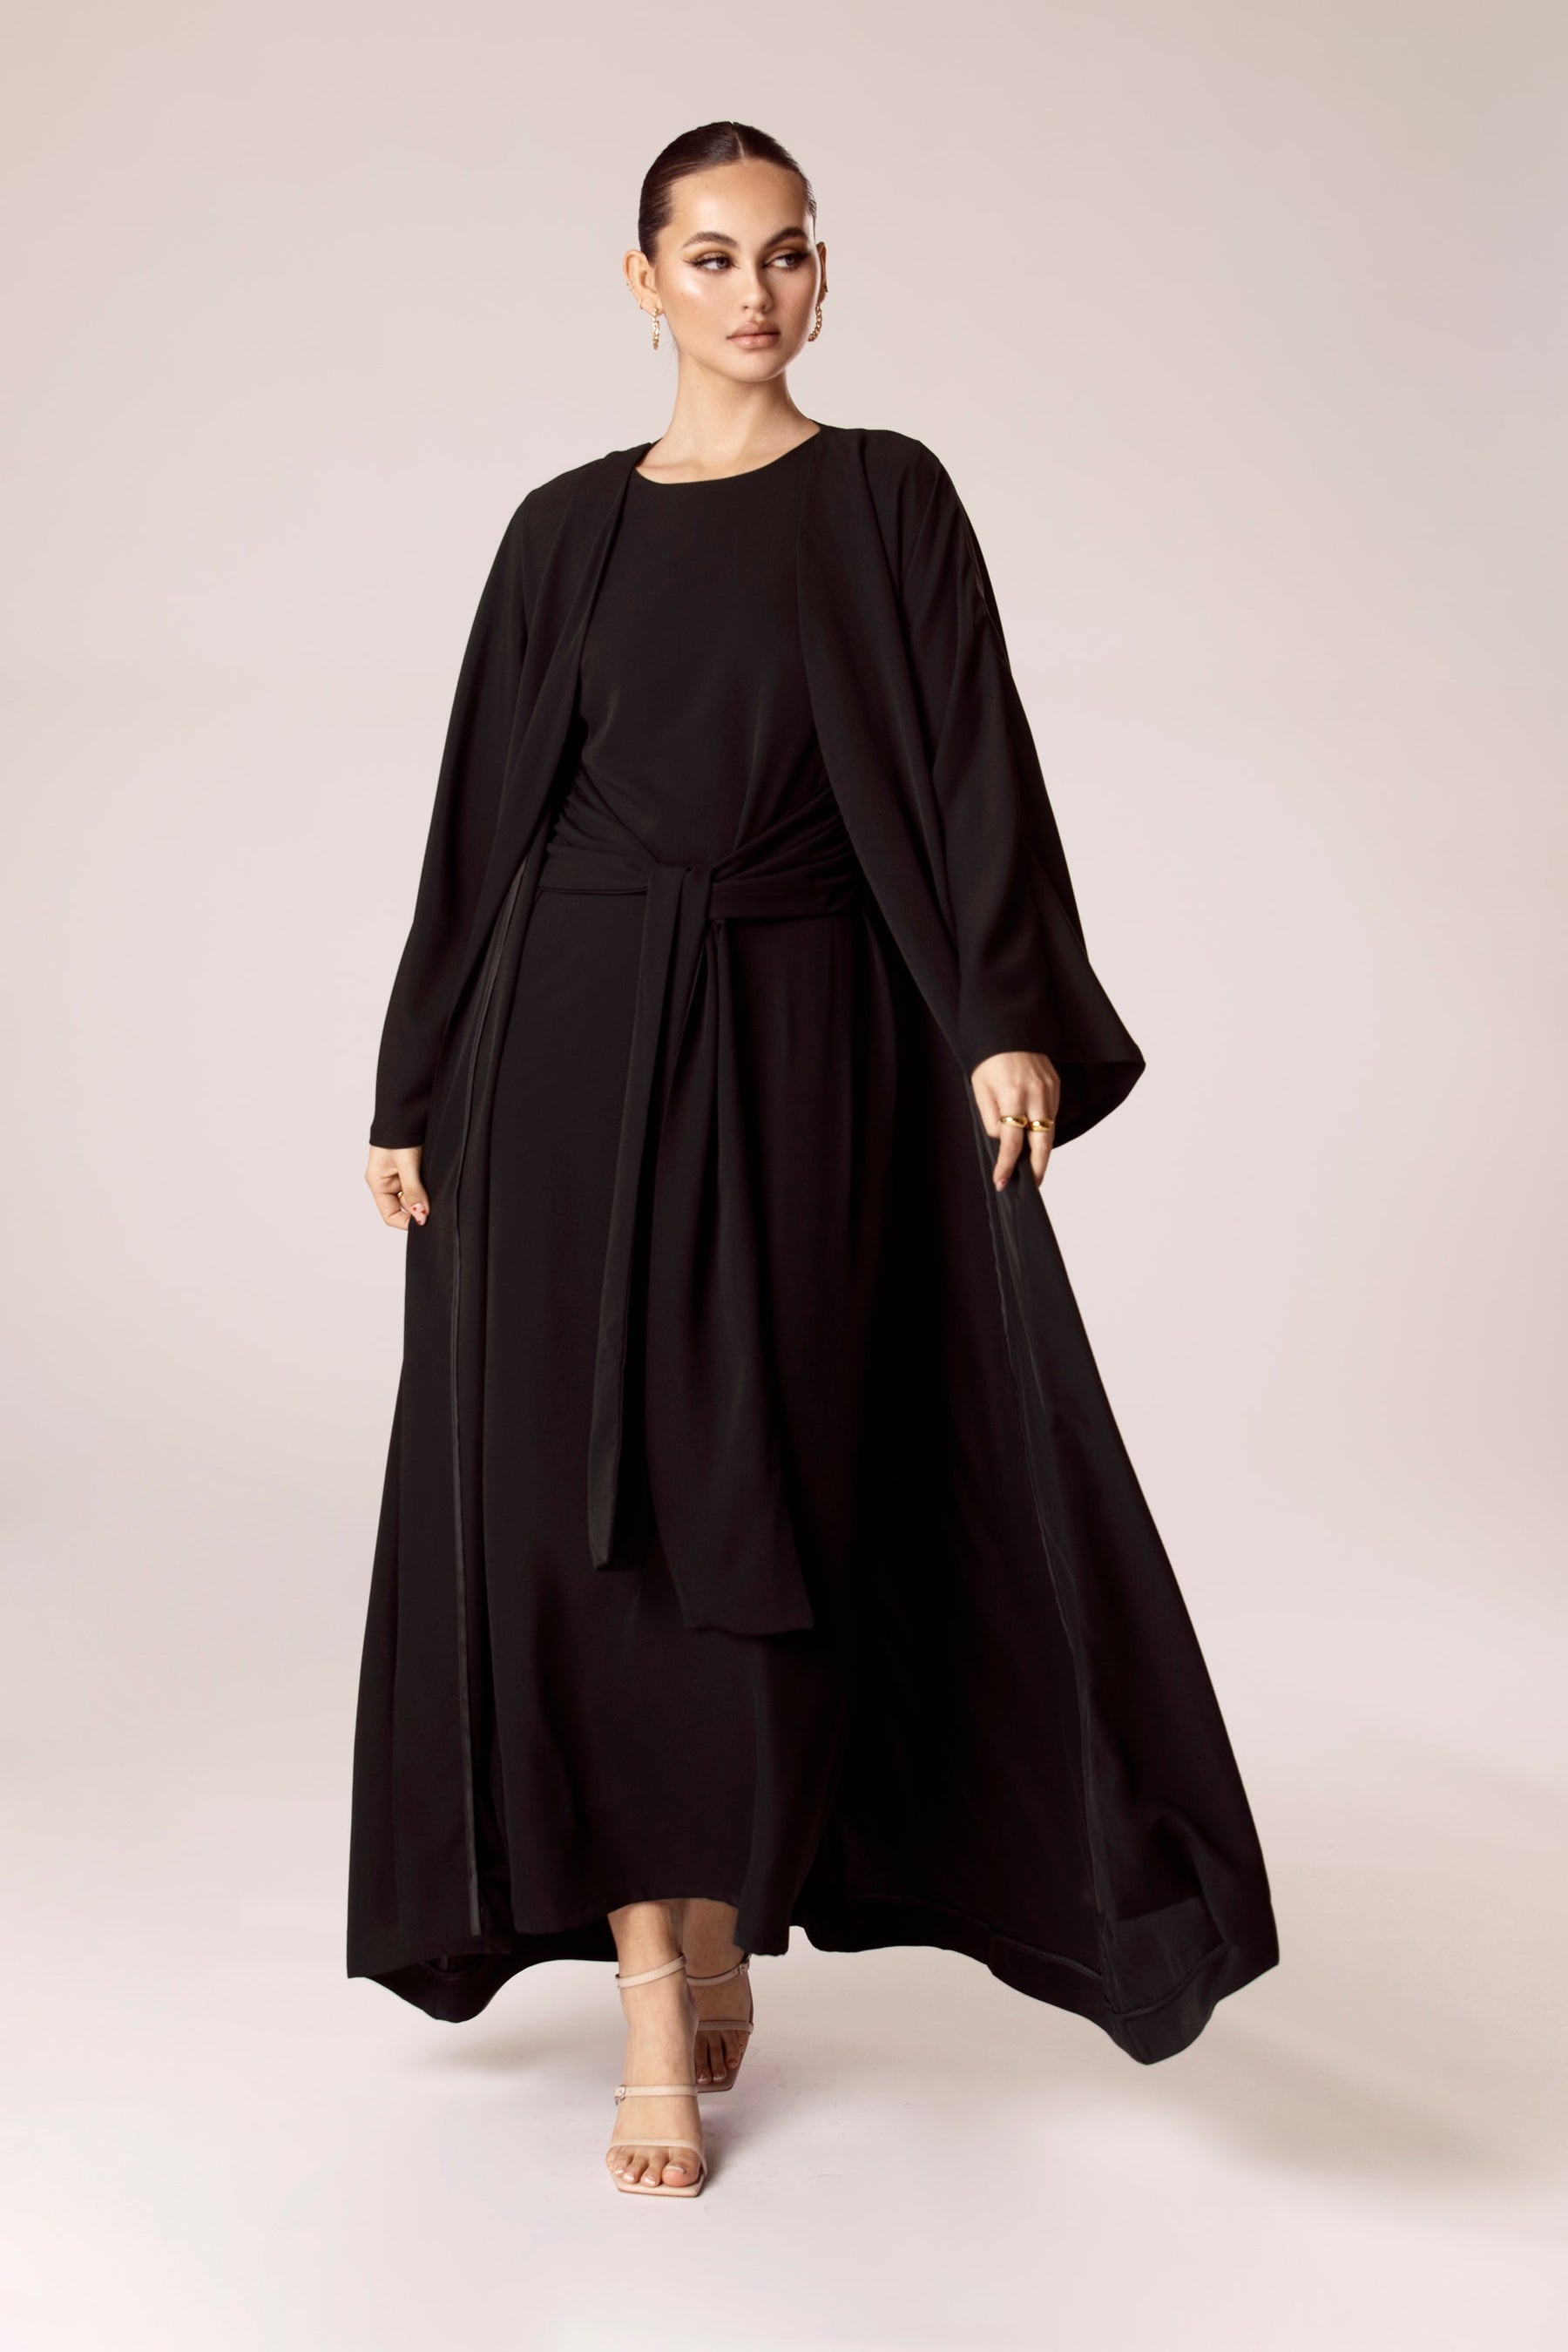 Isabella Open Abaya - Black Veiled Collection 